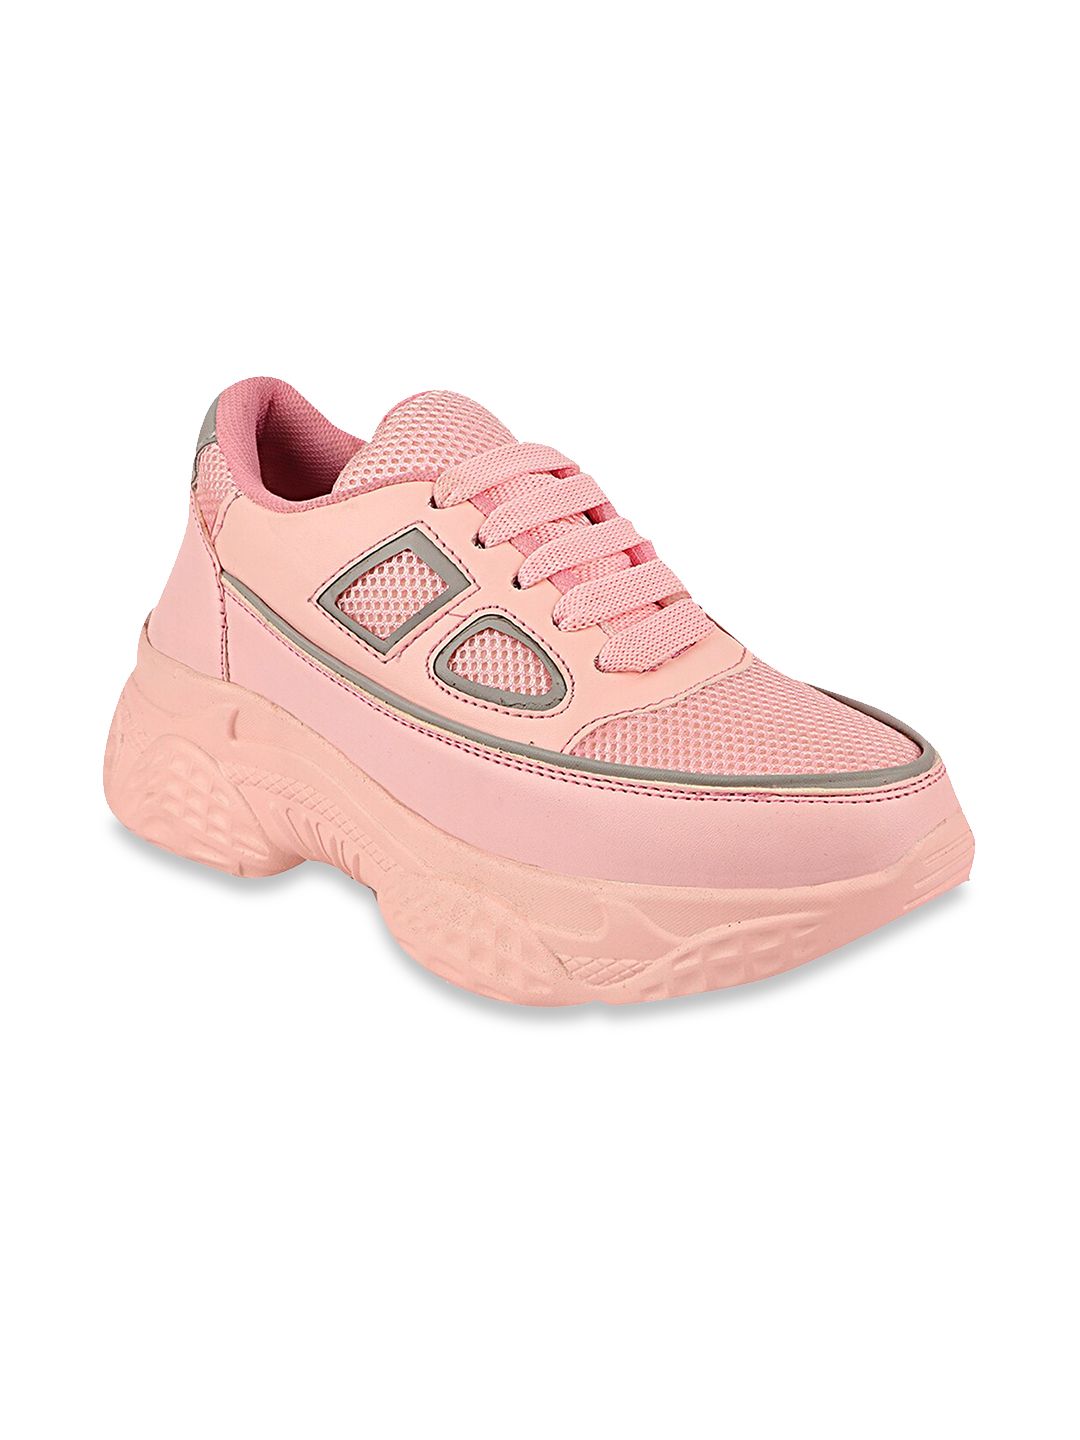 Shoetopia Women Pink Walking Non-Marking Shoes Price in India